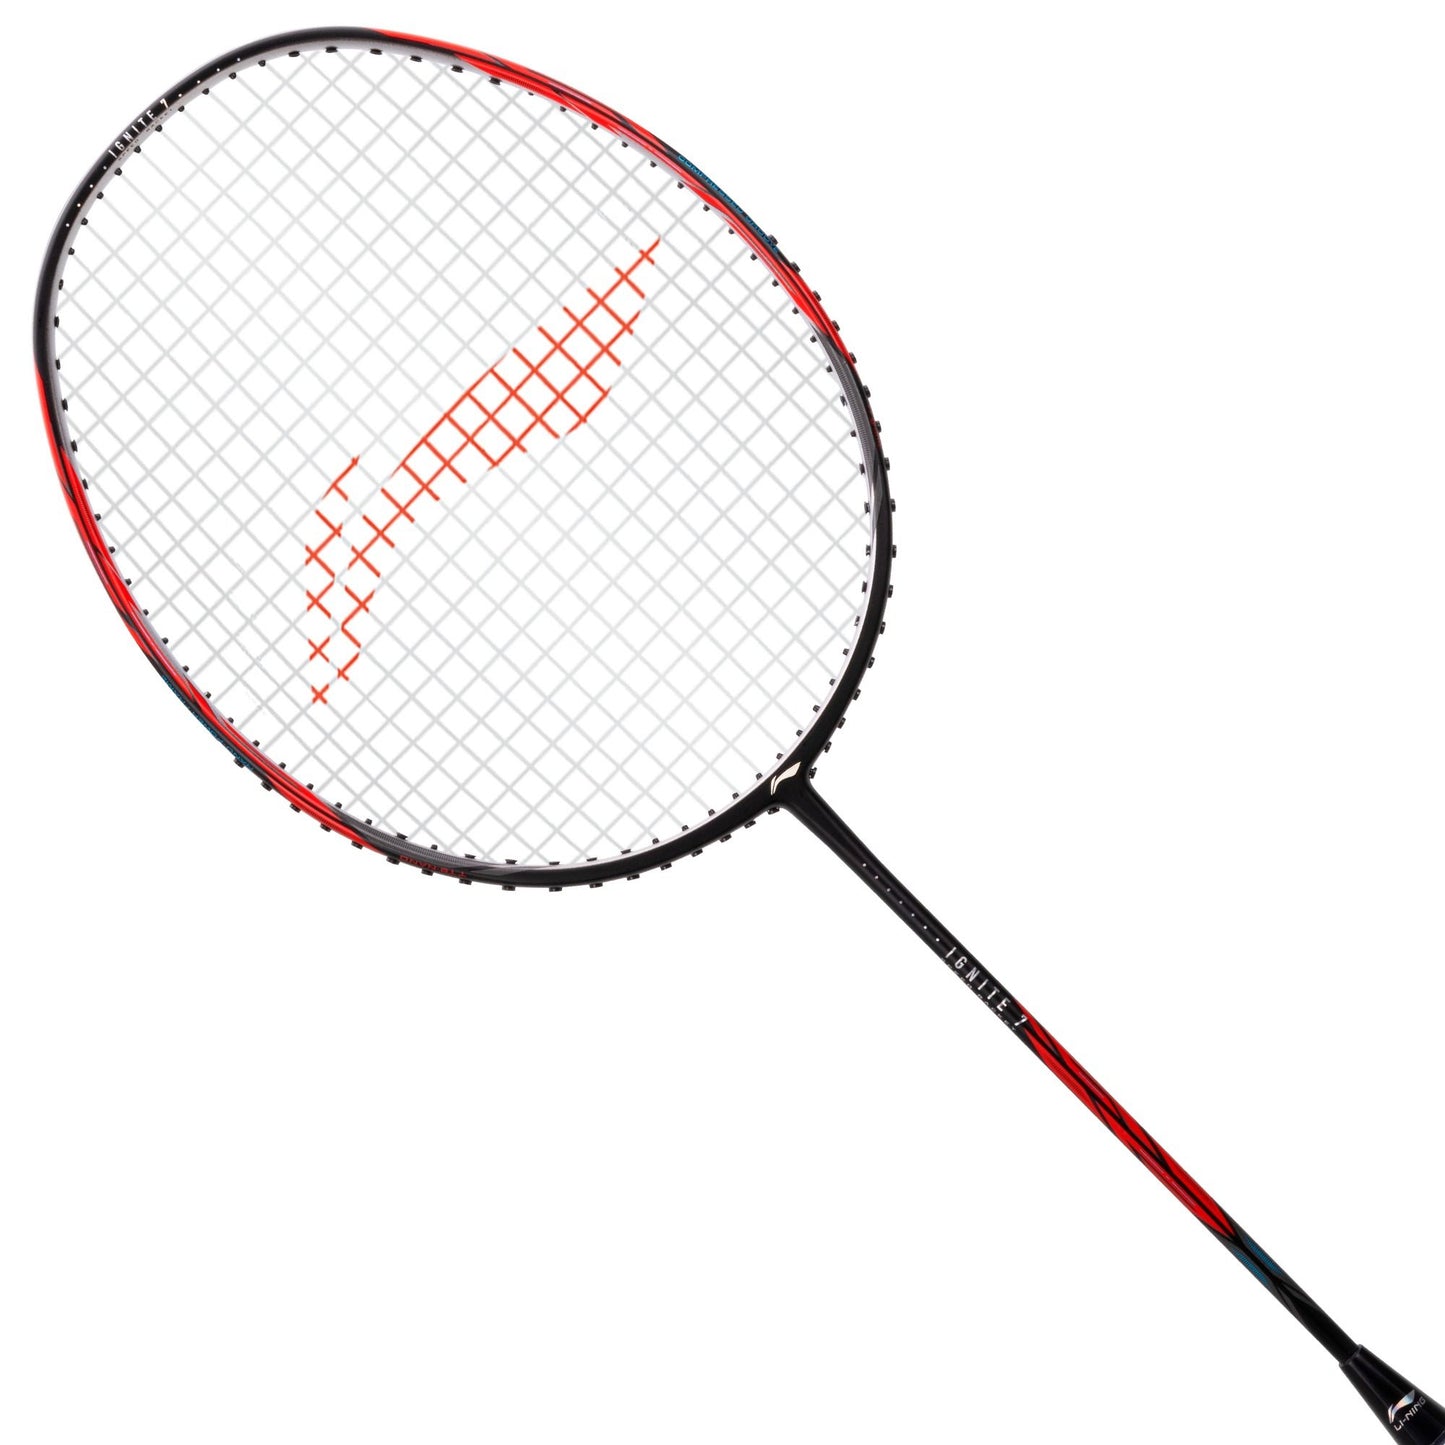 Li-Ning Ignite 7 (Black/Red) Badminton Racket